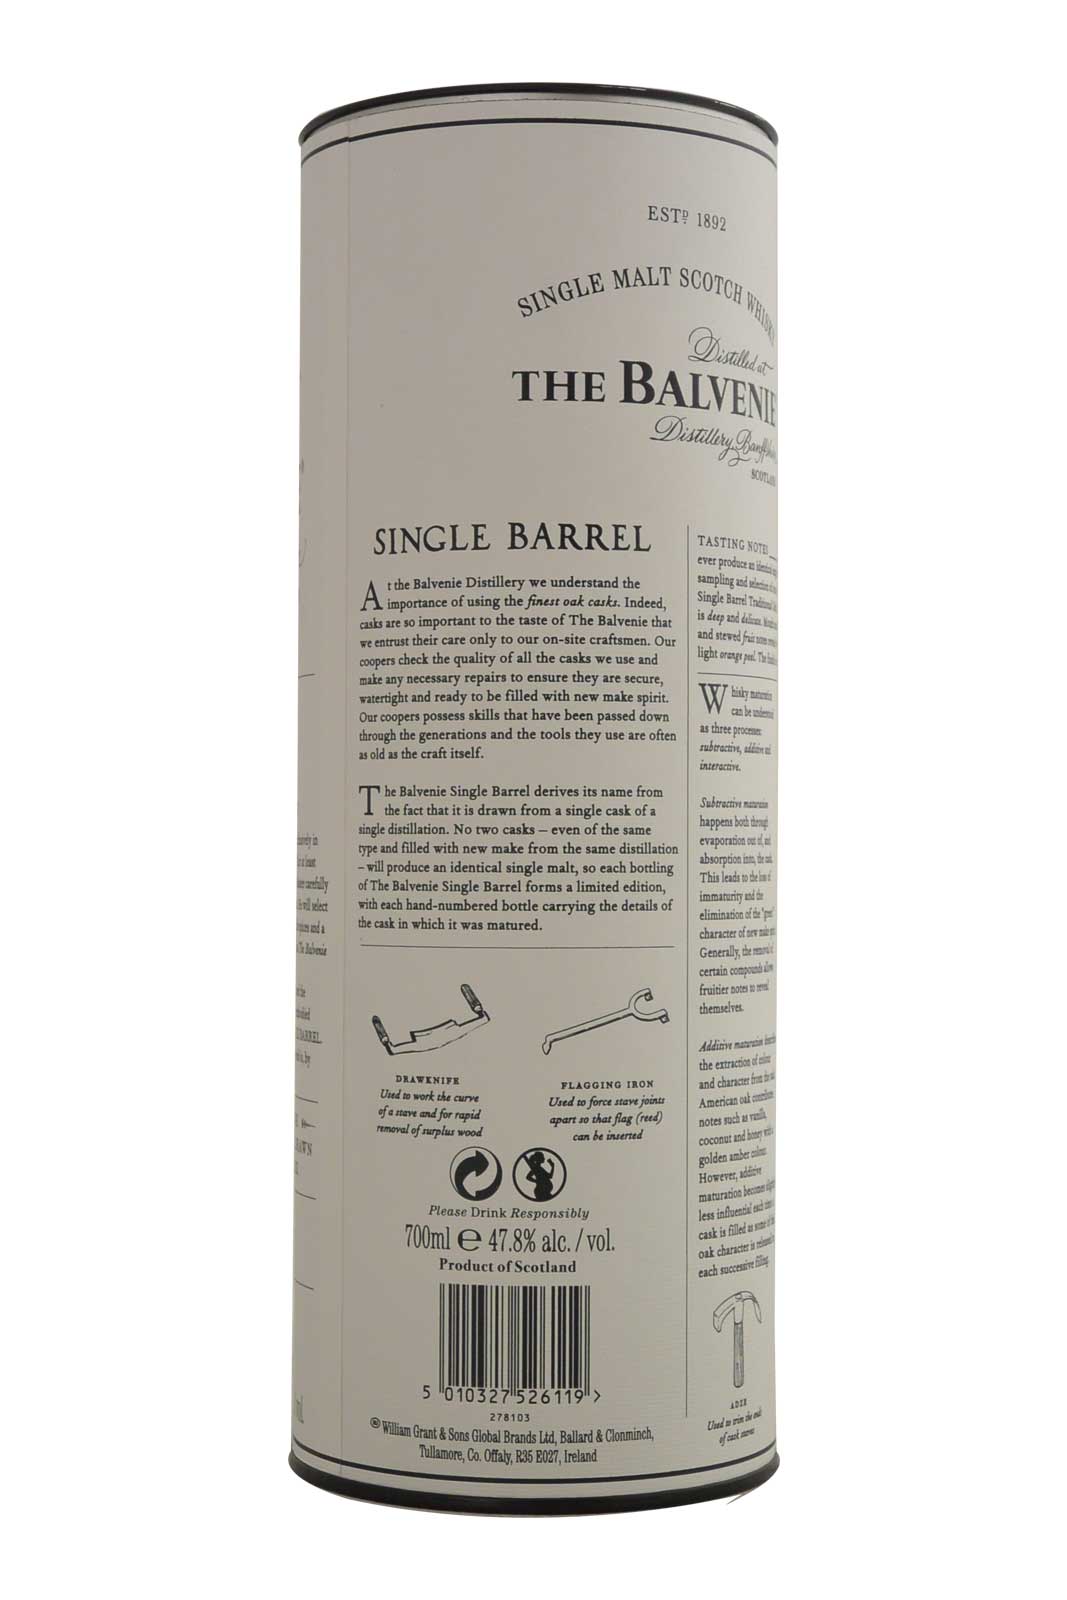 Balvenie 21 Year Old Single Barrel